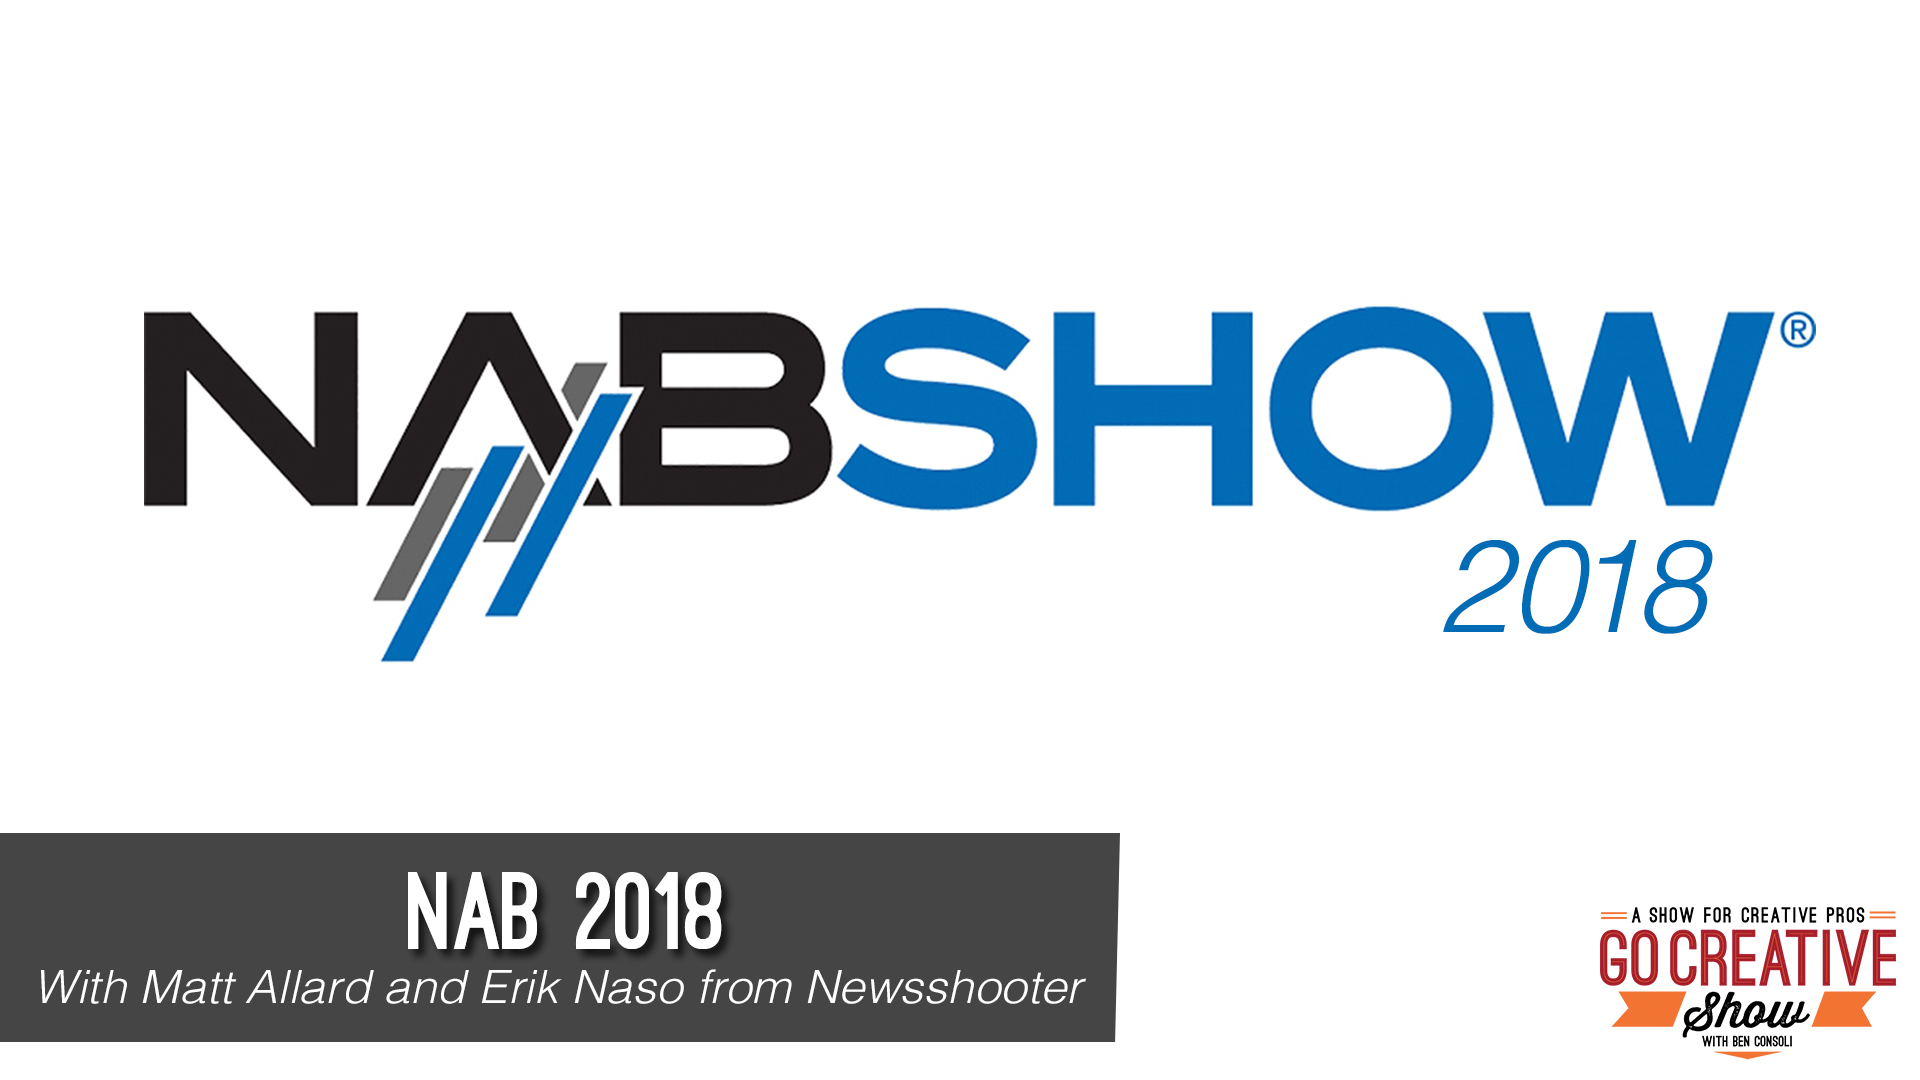 NAB 2018 coverage with Erik Naso and Matt Allard